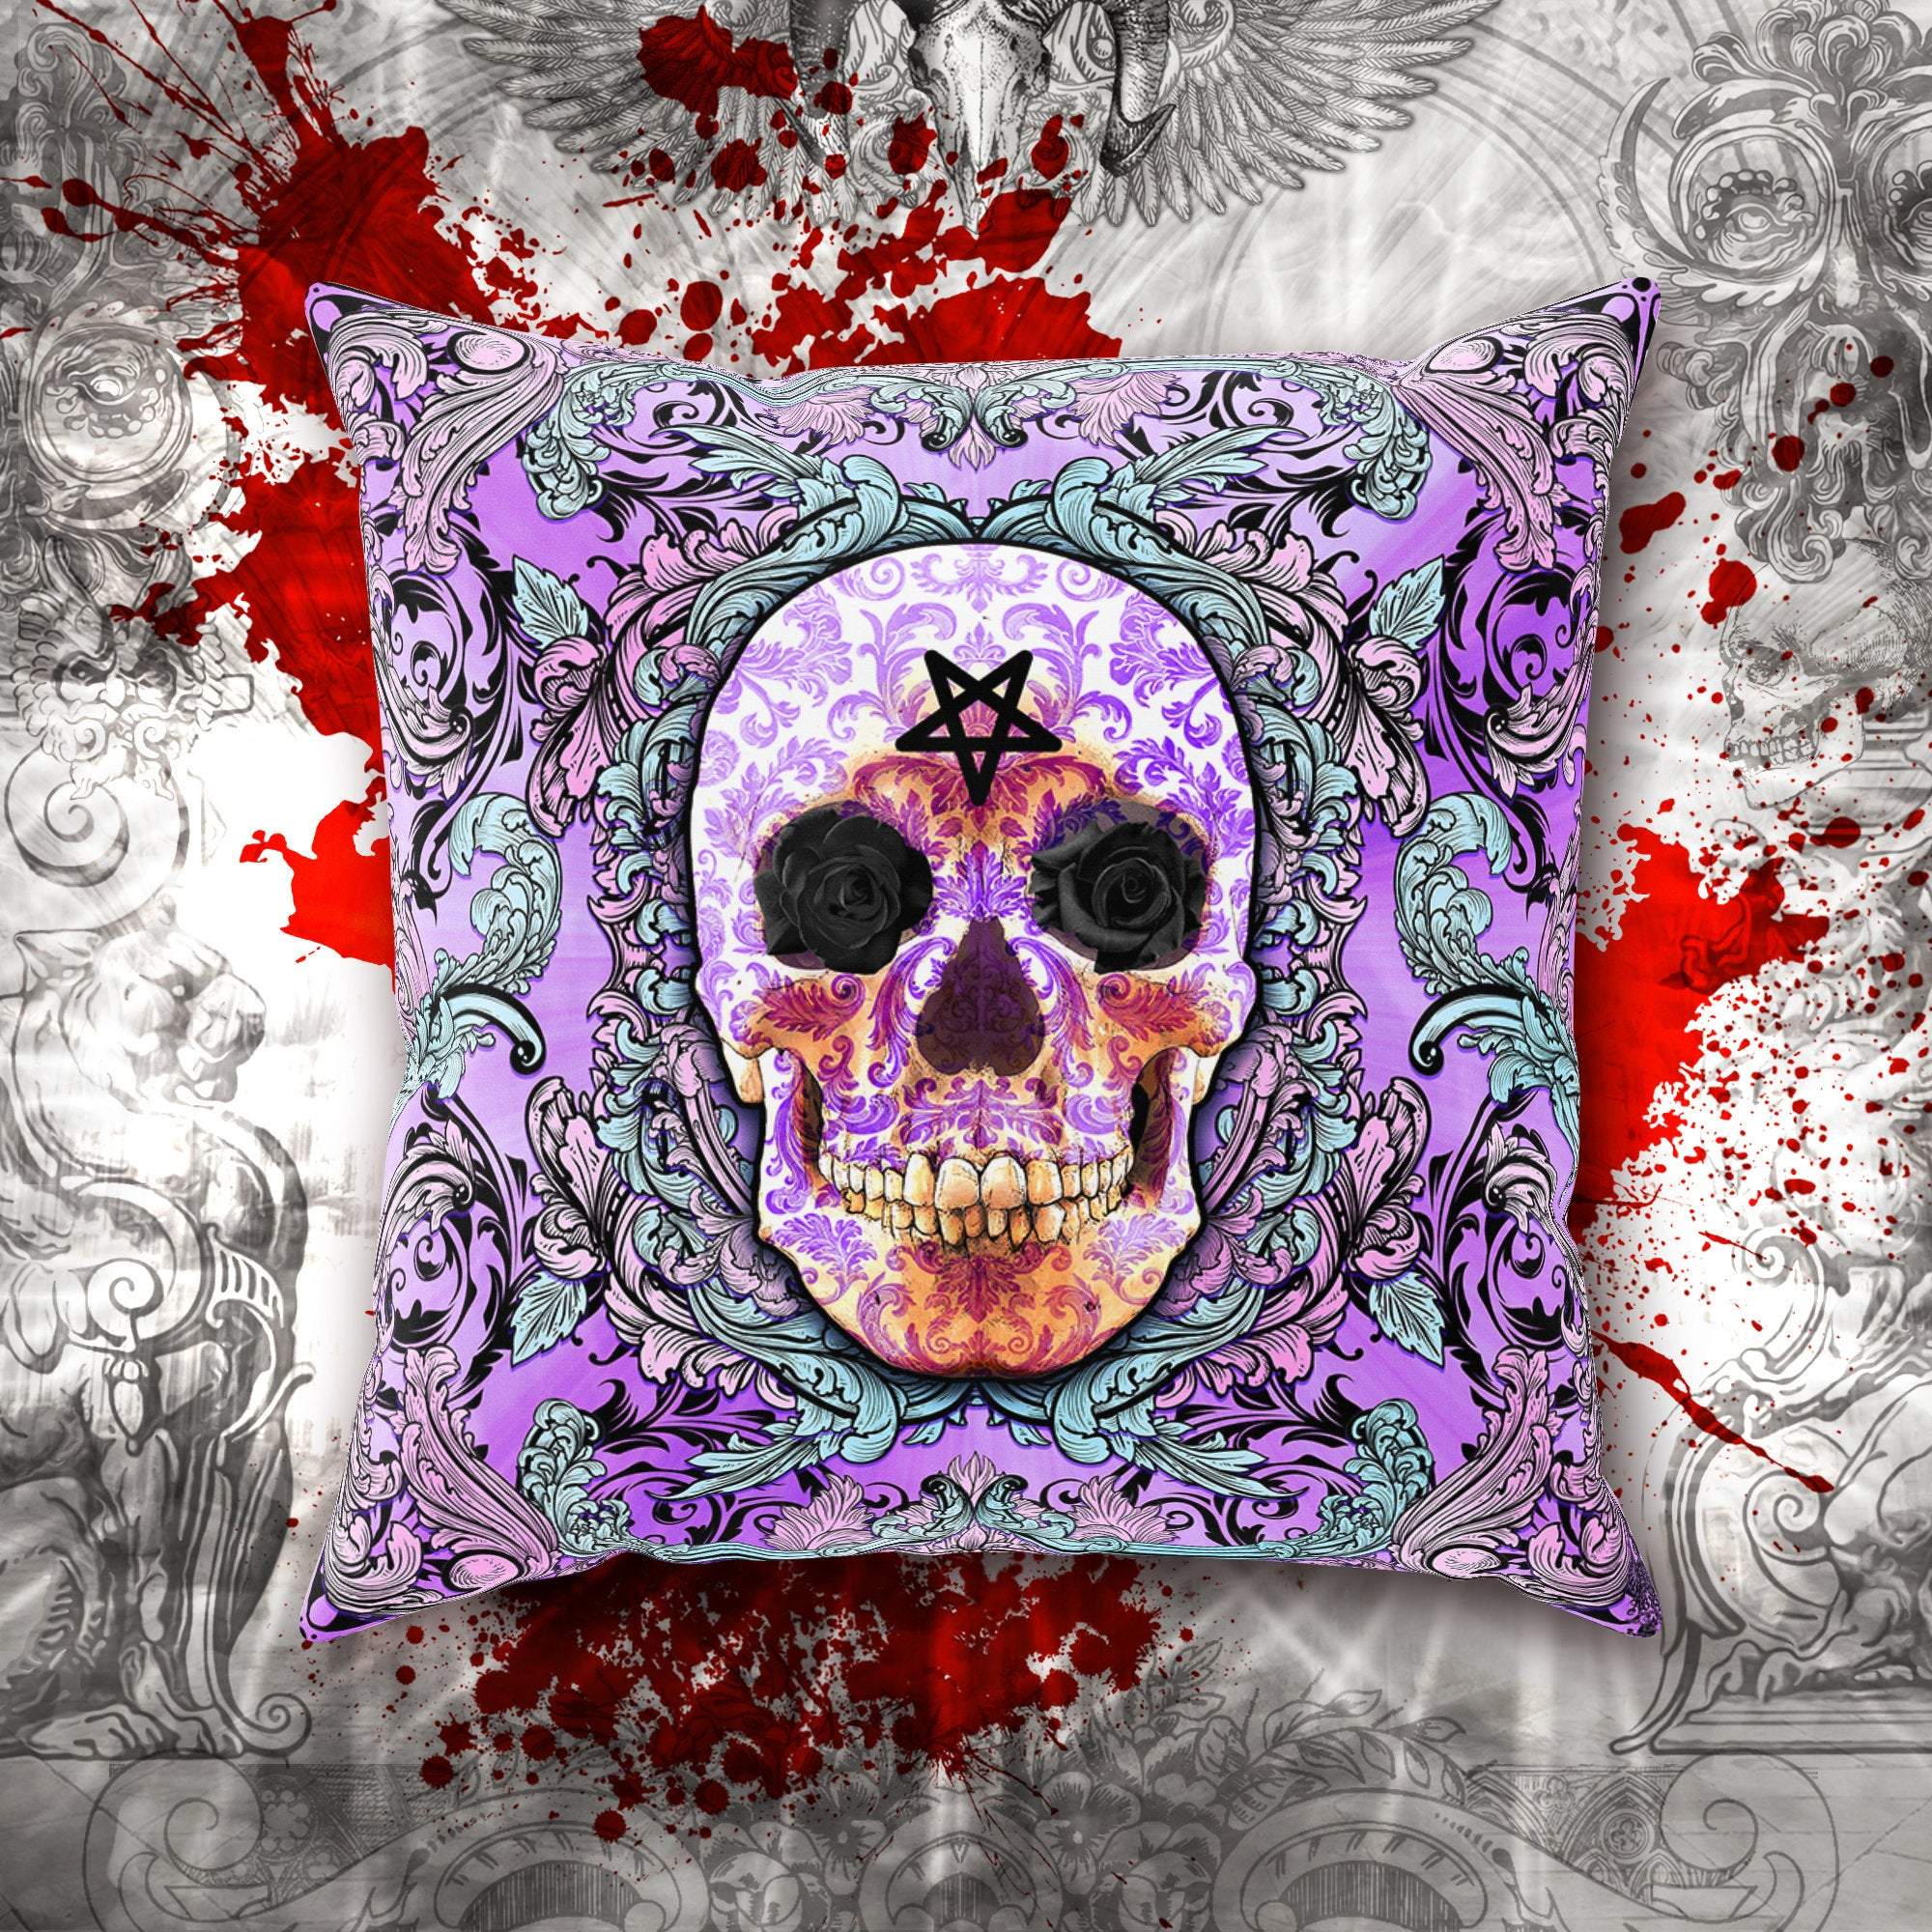 Pastel Goth Throw Pillow, Decorative Accent Cushion, Gothic Room Decor, Macabre Art, Alternative Home - Purple Skull - Abysm Internal